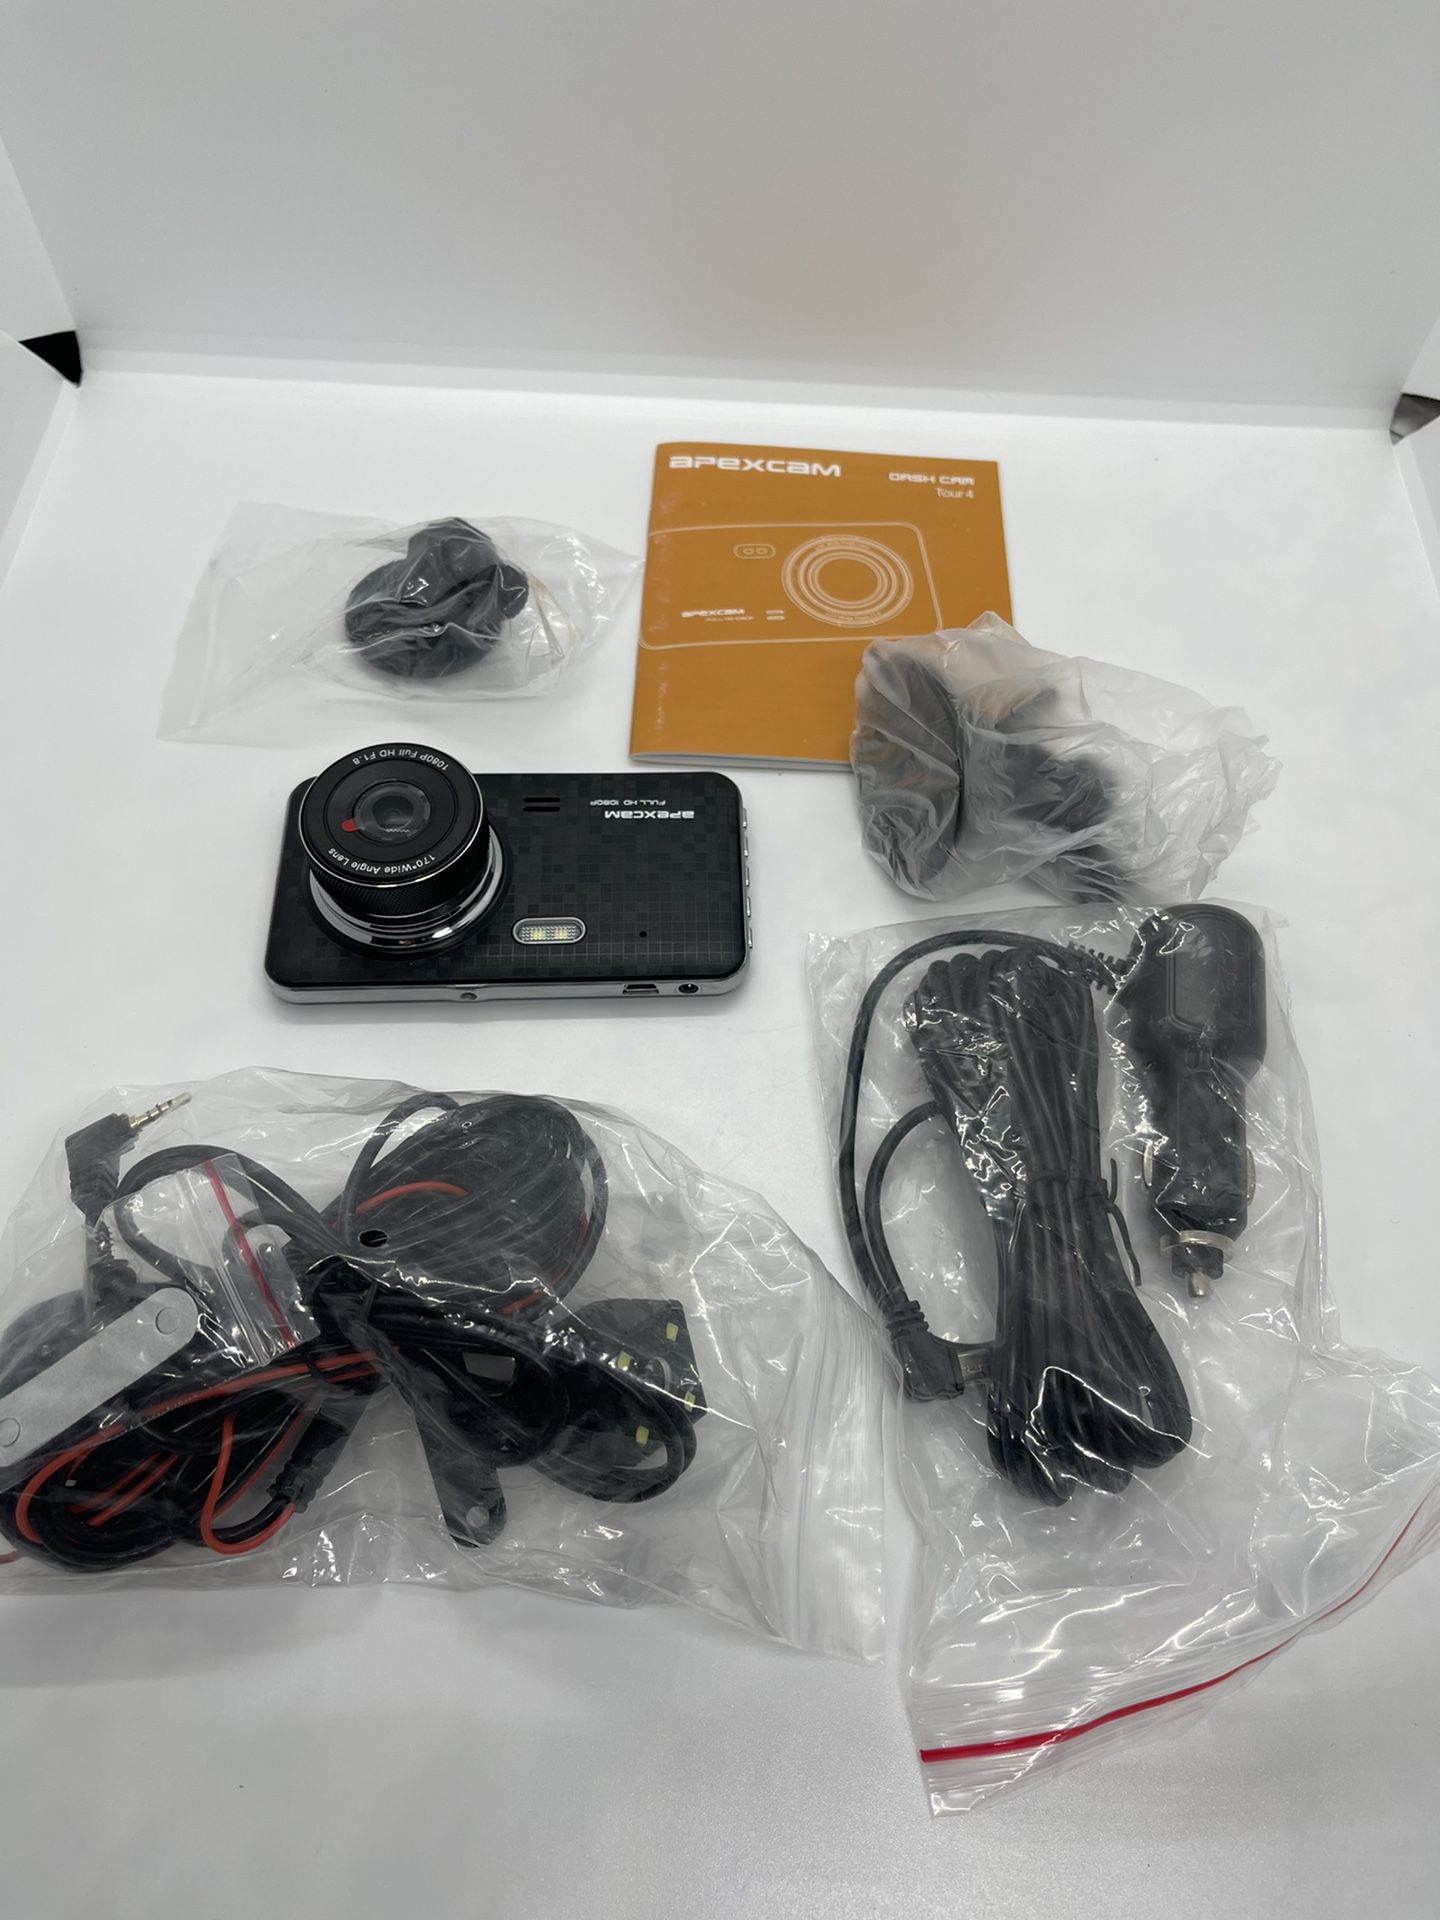 Apexcam TOUR-4 1080P Car Front Rear Dash Cam User Manual